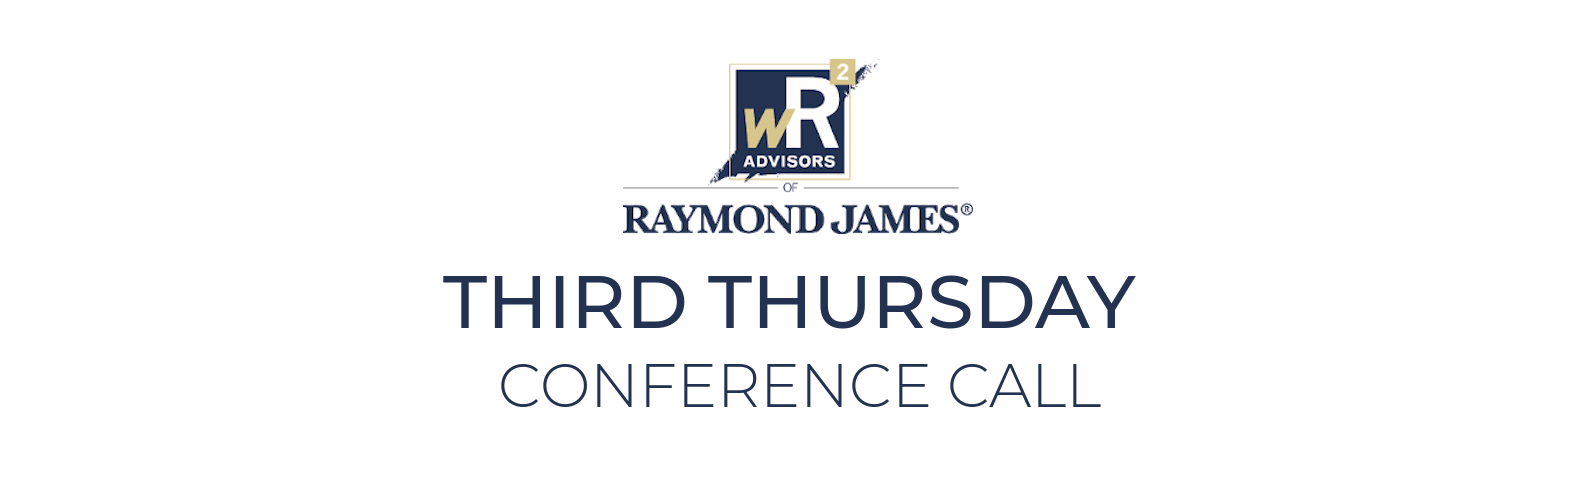 Third Thursday Conference Call November